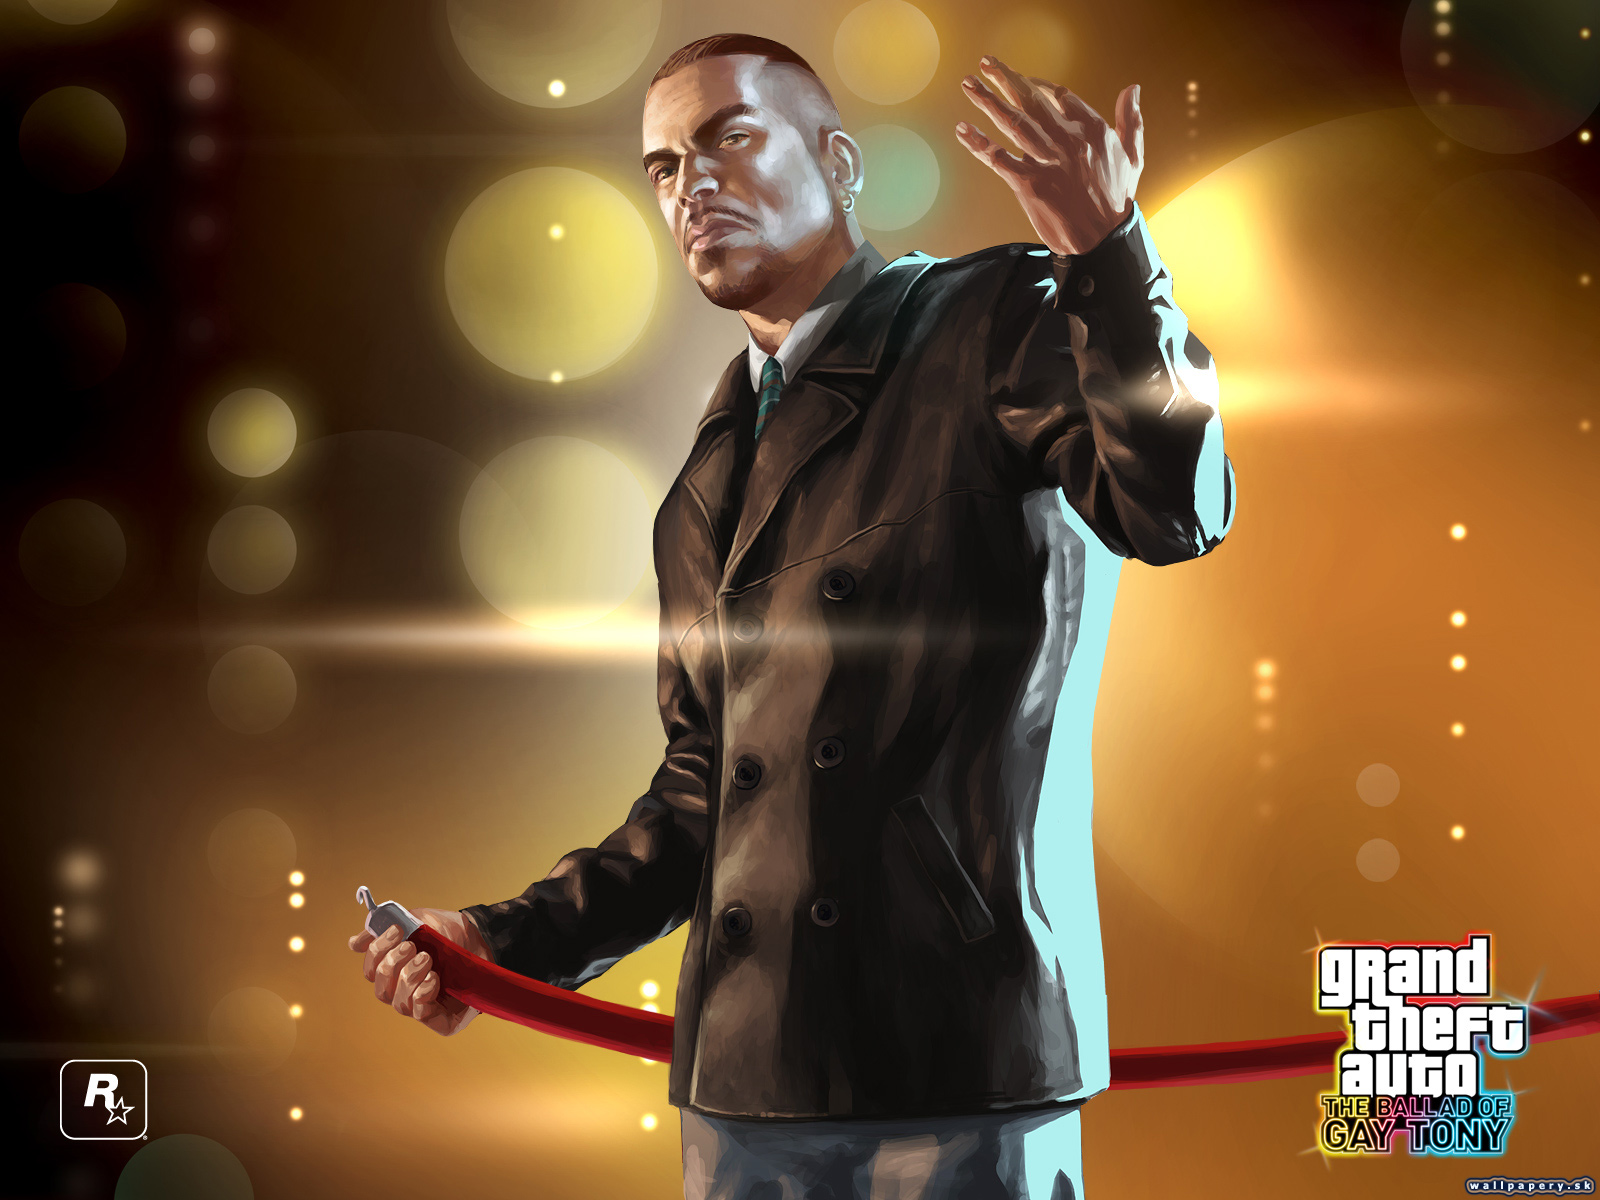 Grand Theft Auto IV: The Ballad of Gay Tony - wallpaper 8